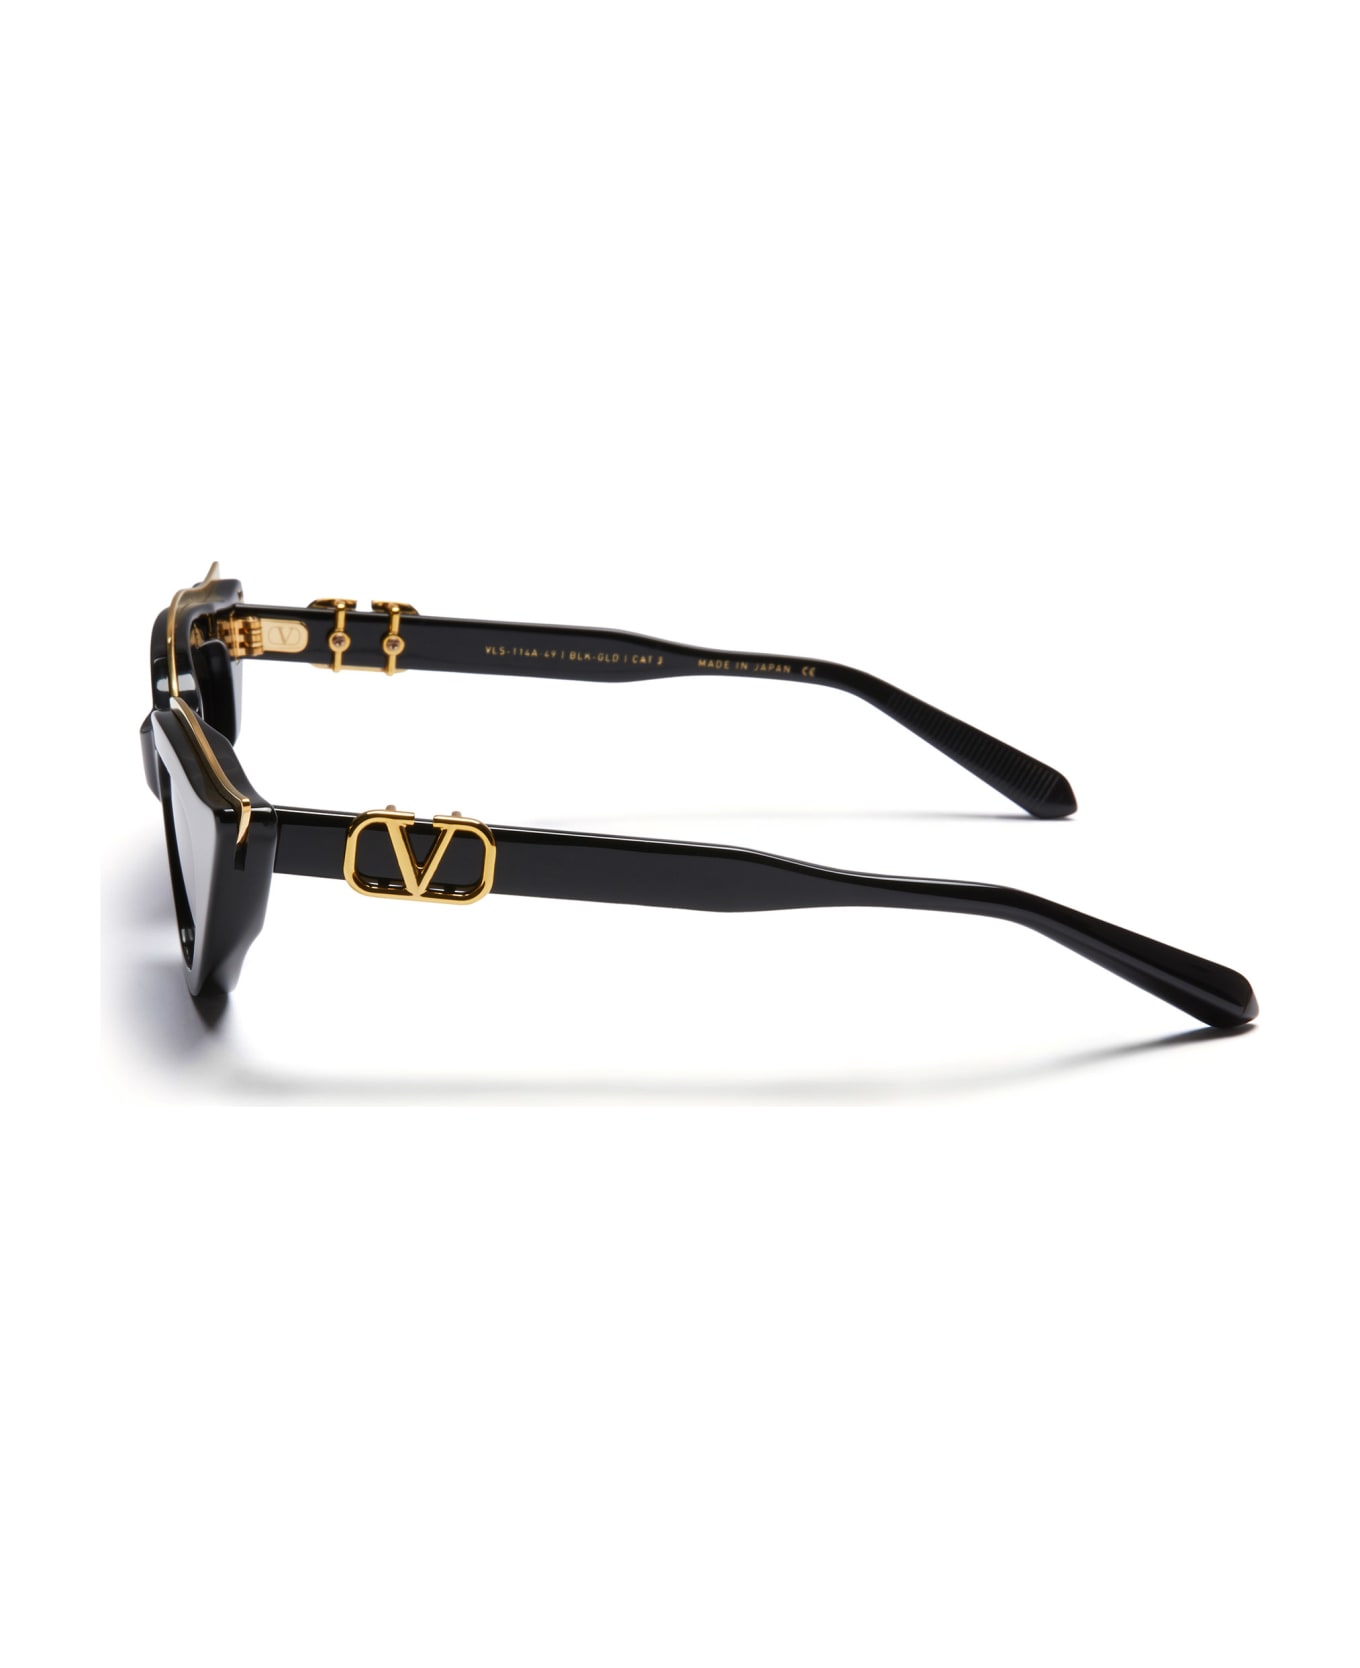 Valentino Eyewear Goldcut-ii - Black/ Yellow Gold Sunglasses - Black/gold